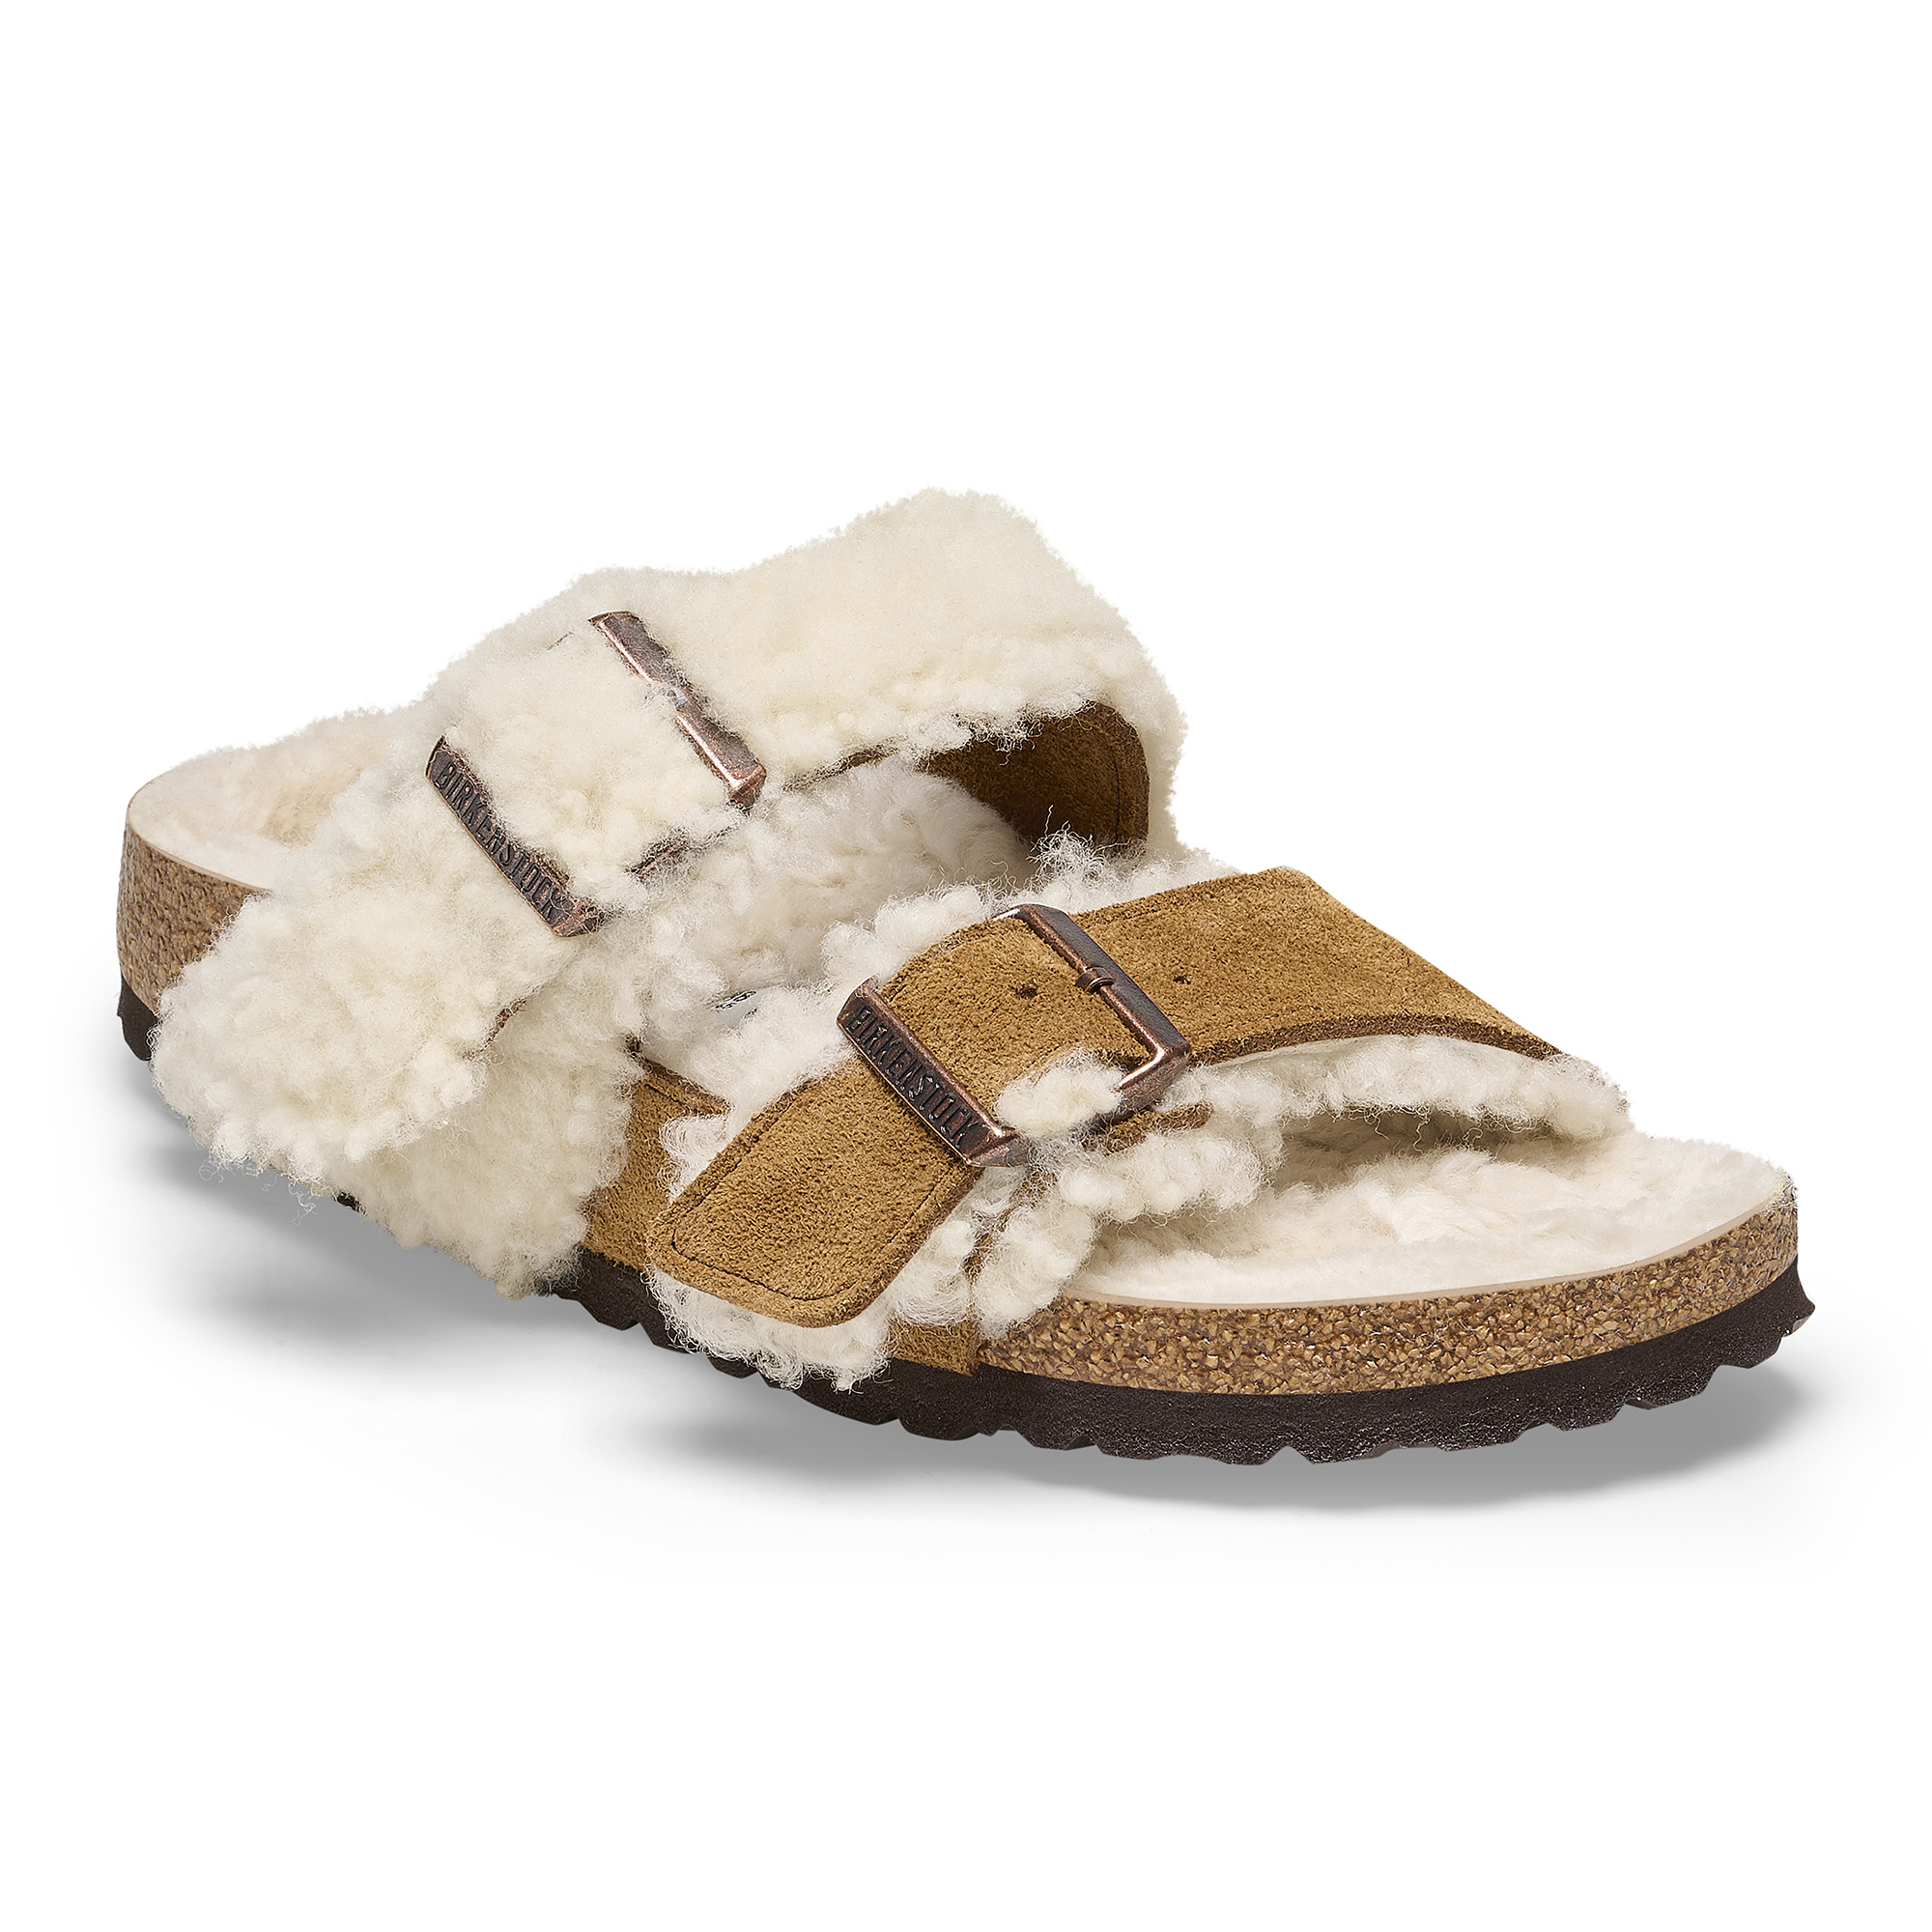 Birkenstock Arizona Shearling Sandals Size 36 US 5 Mink Suede NWT Narrow